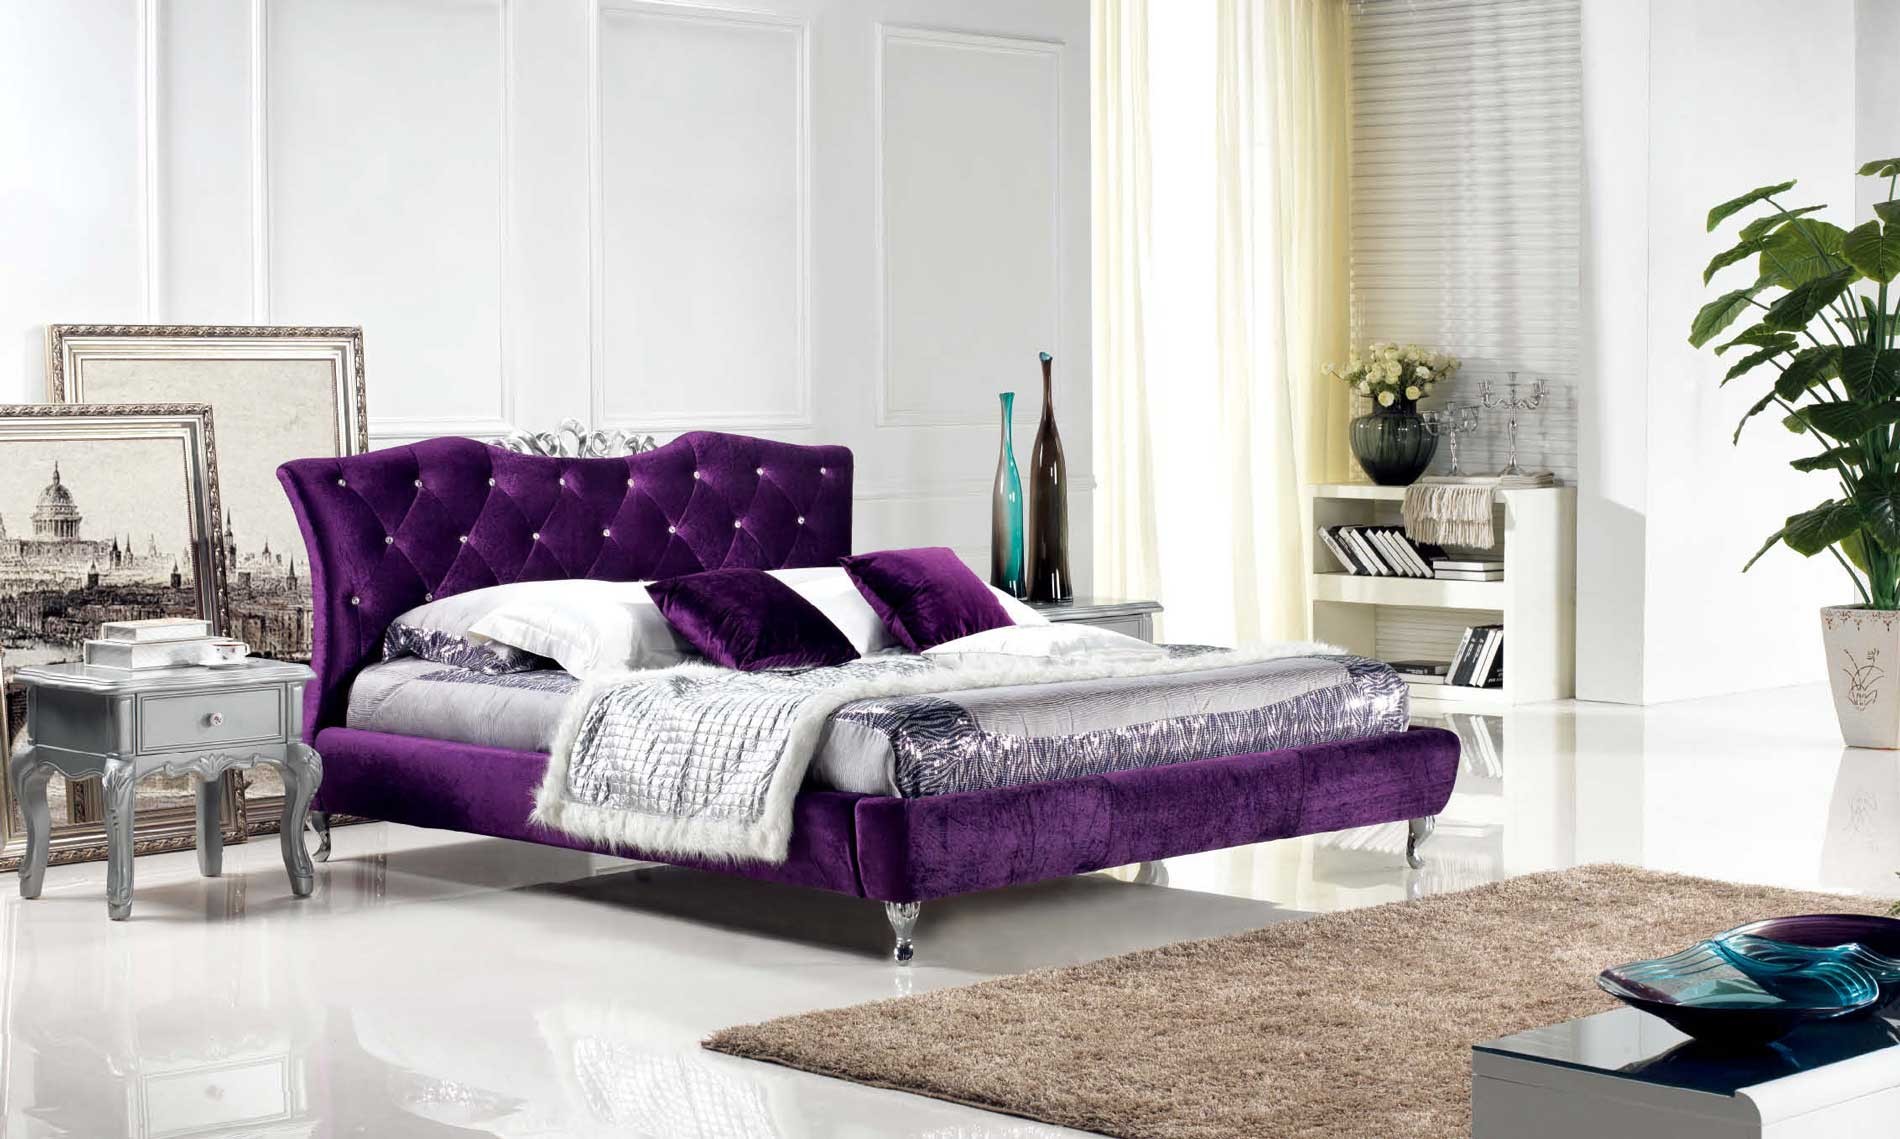 custom made bedroom furniture perth